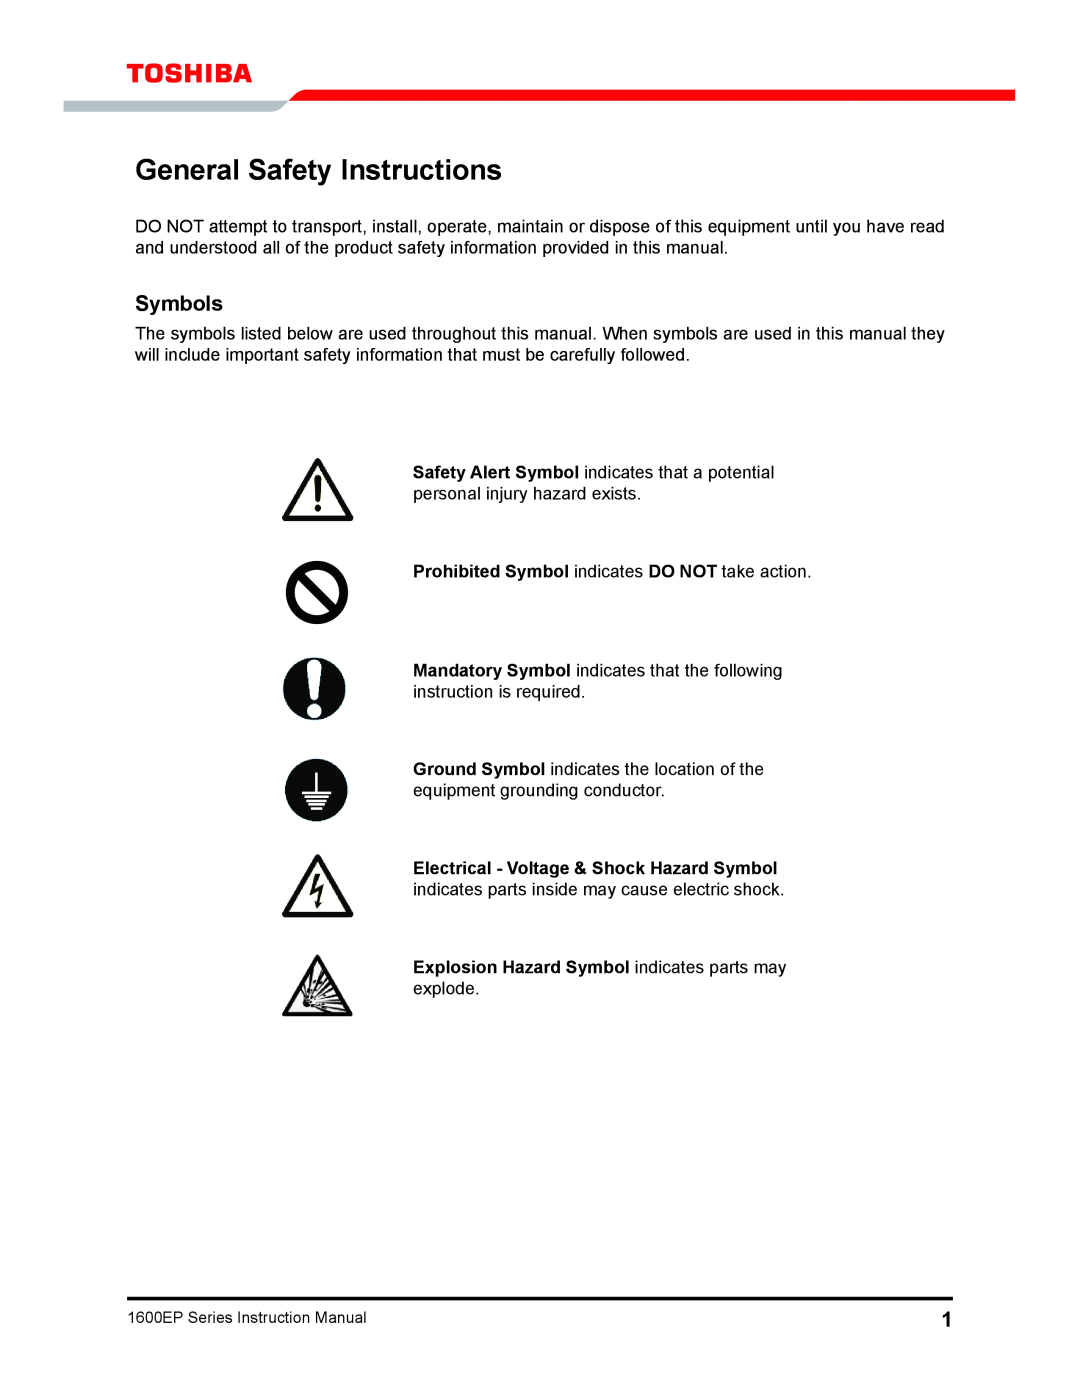 Toshiba 1600EP Series manual General Safety Instructions, Symbols, Prohibited Symbol indicates DO NOT take action 